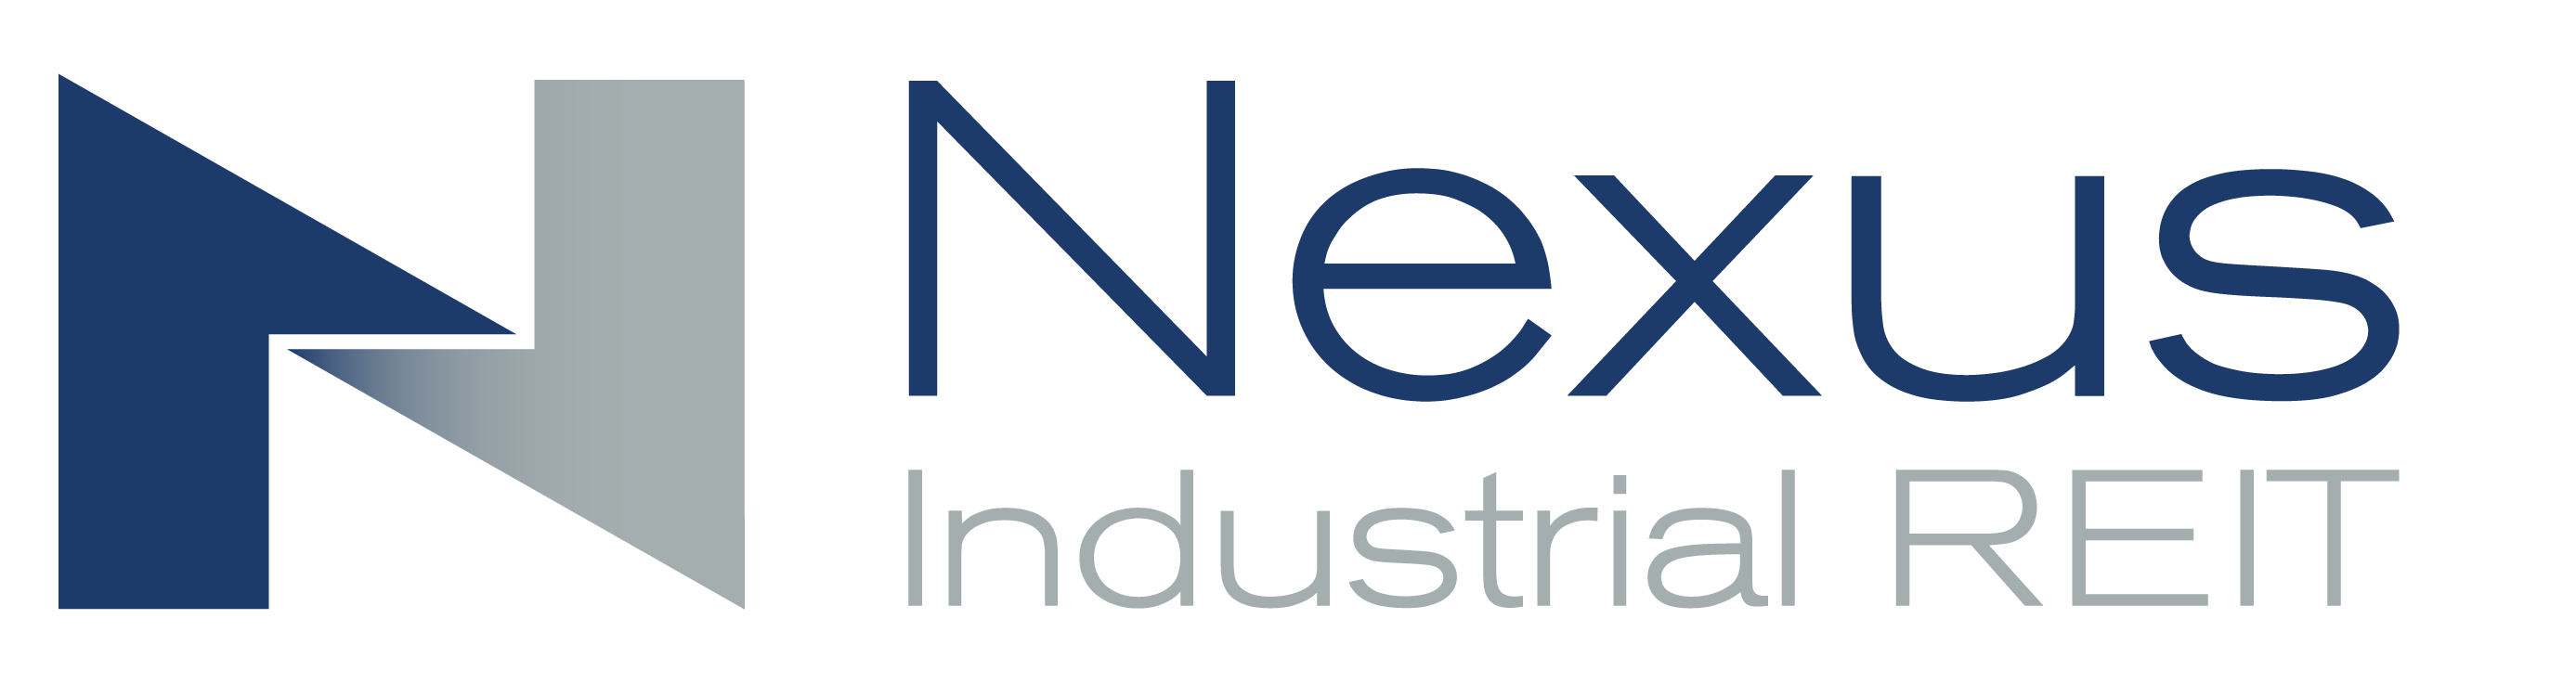 FPI industriel Nexus